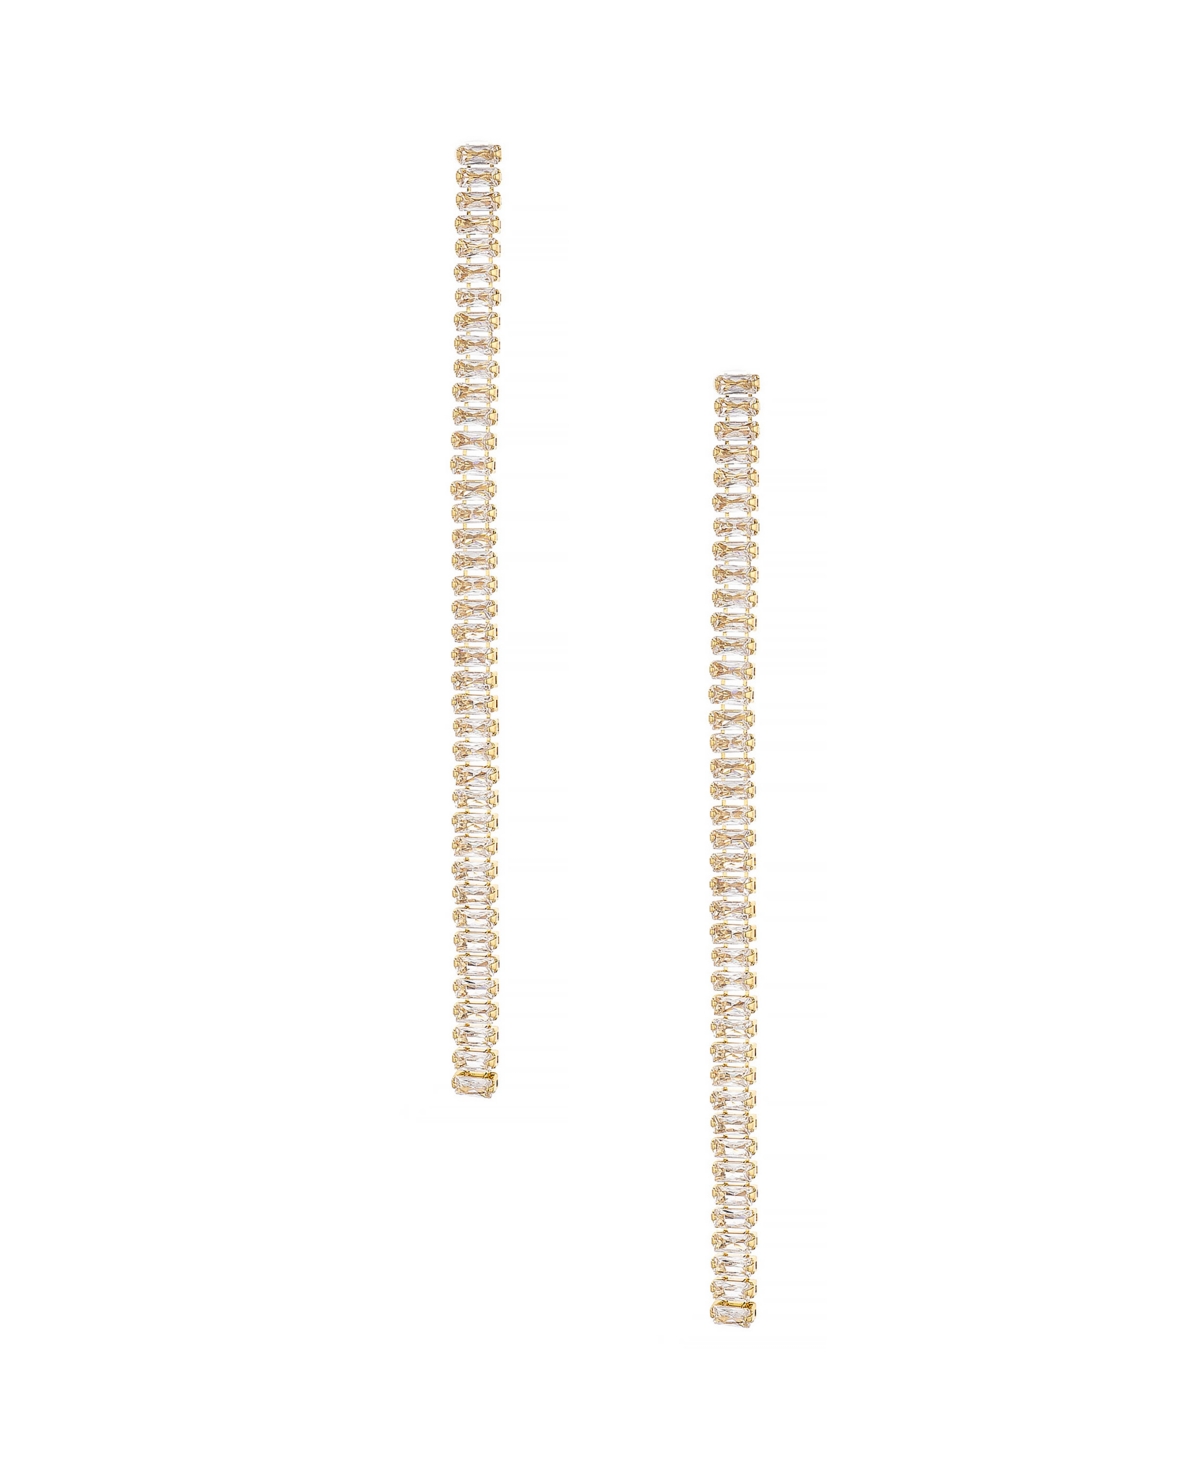 Singular 18K Gold Plated Drop Earrings - Gold